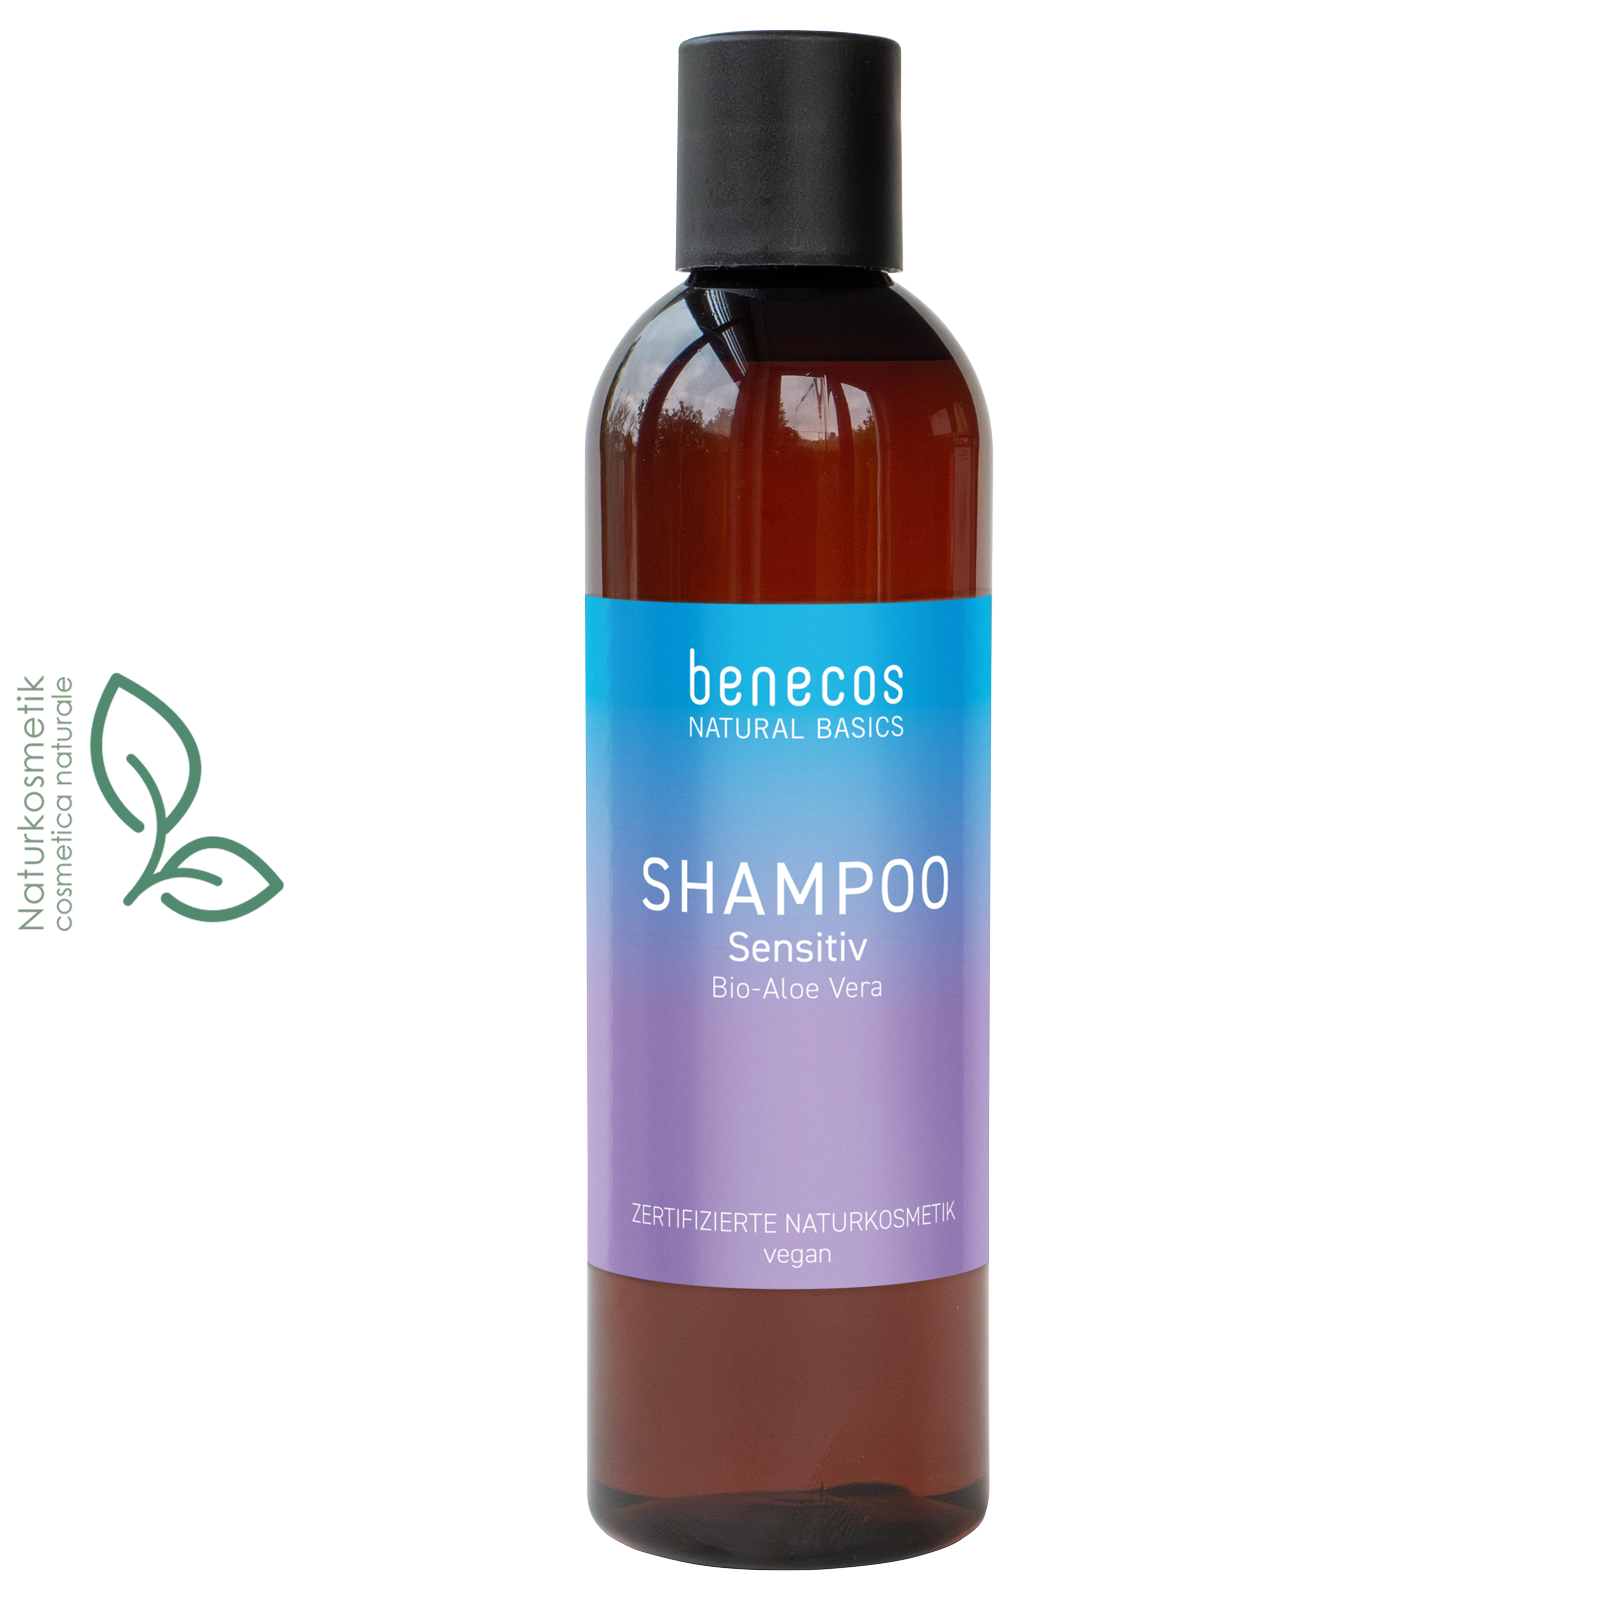 BENECOS natural  BASIC shampoo  sensitive aloe vera BIO *250ml